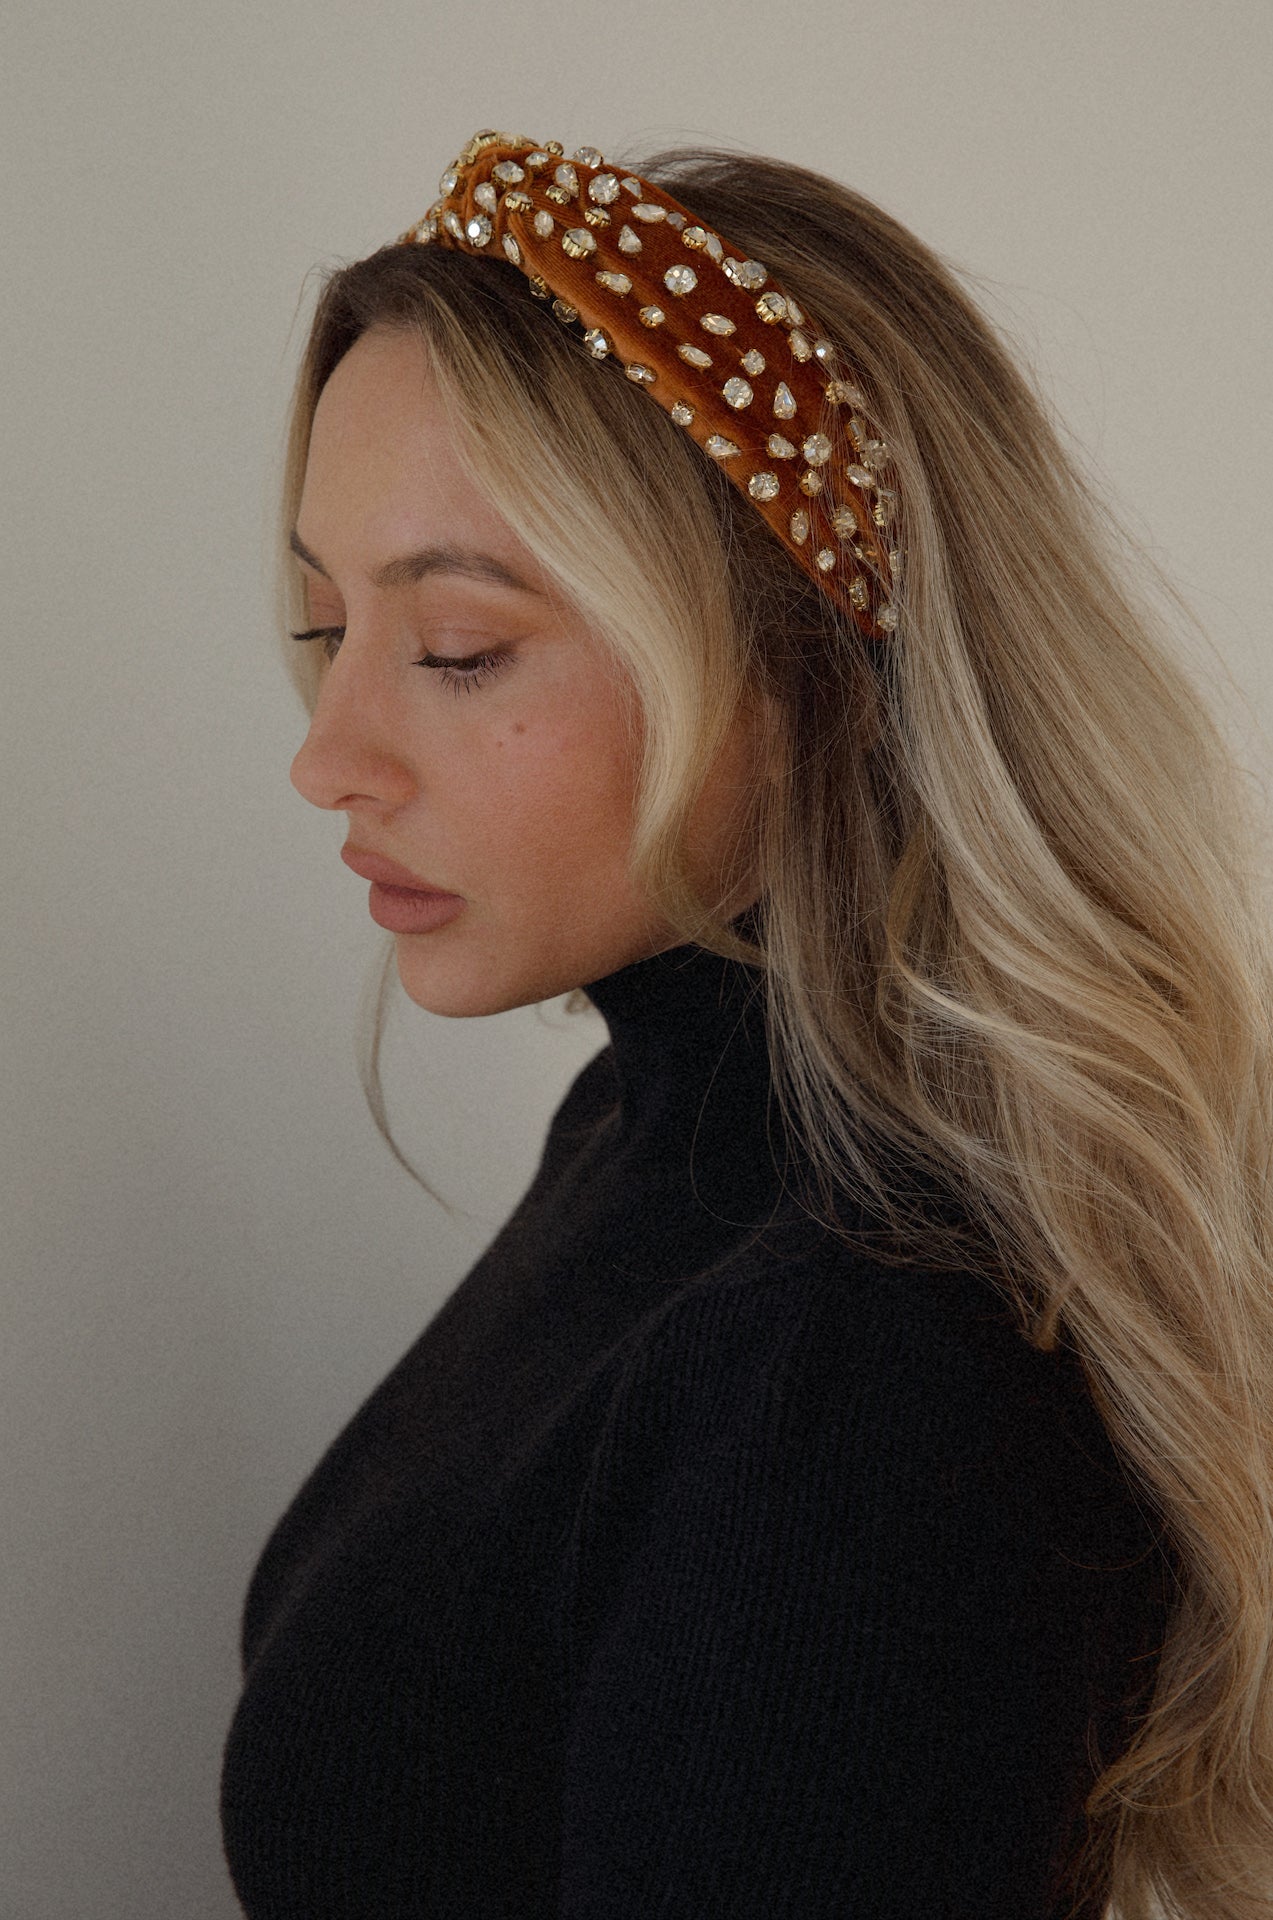 rust rhinestone headband with a top knot design